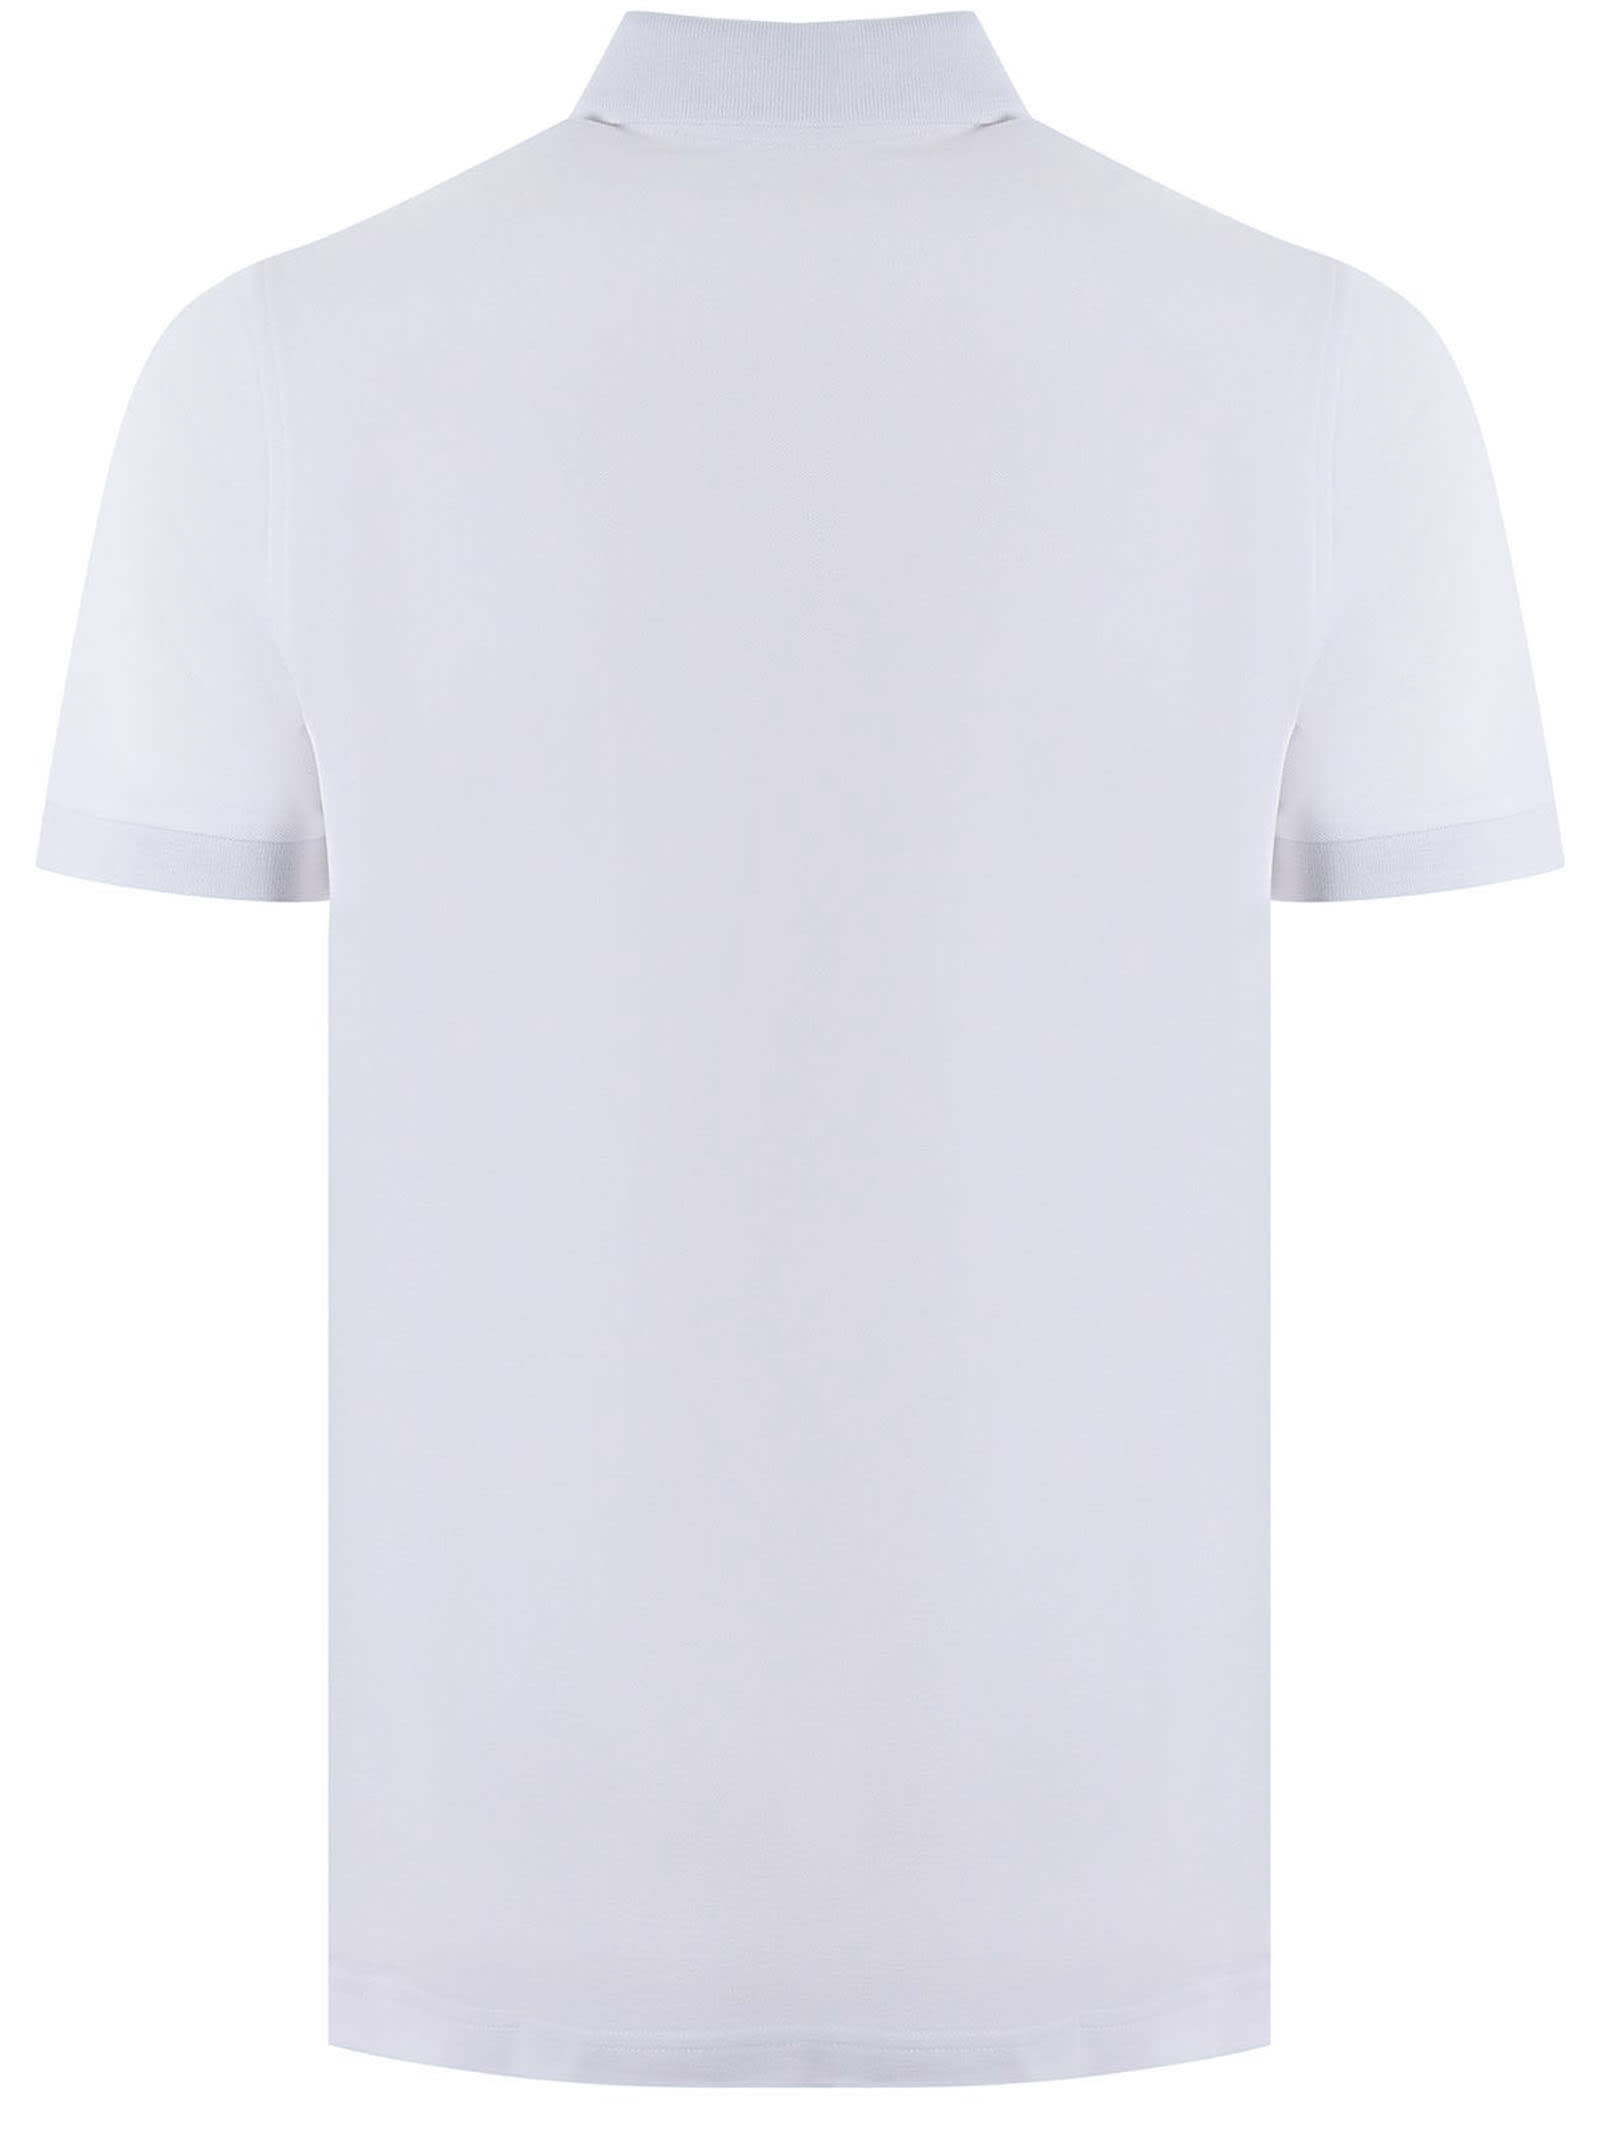 Shop Fay White Cotton Polo Shirt